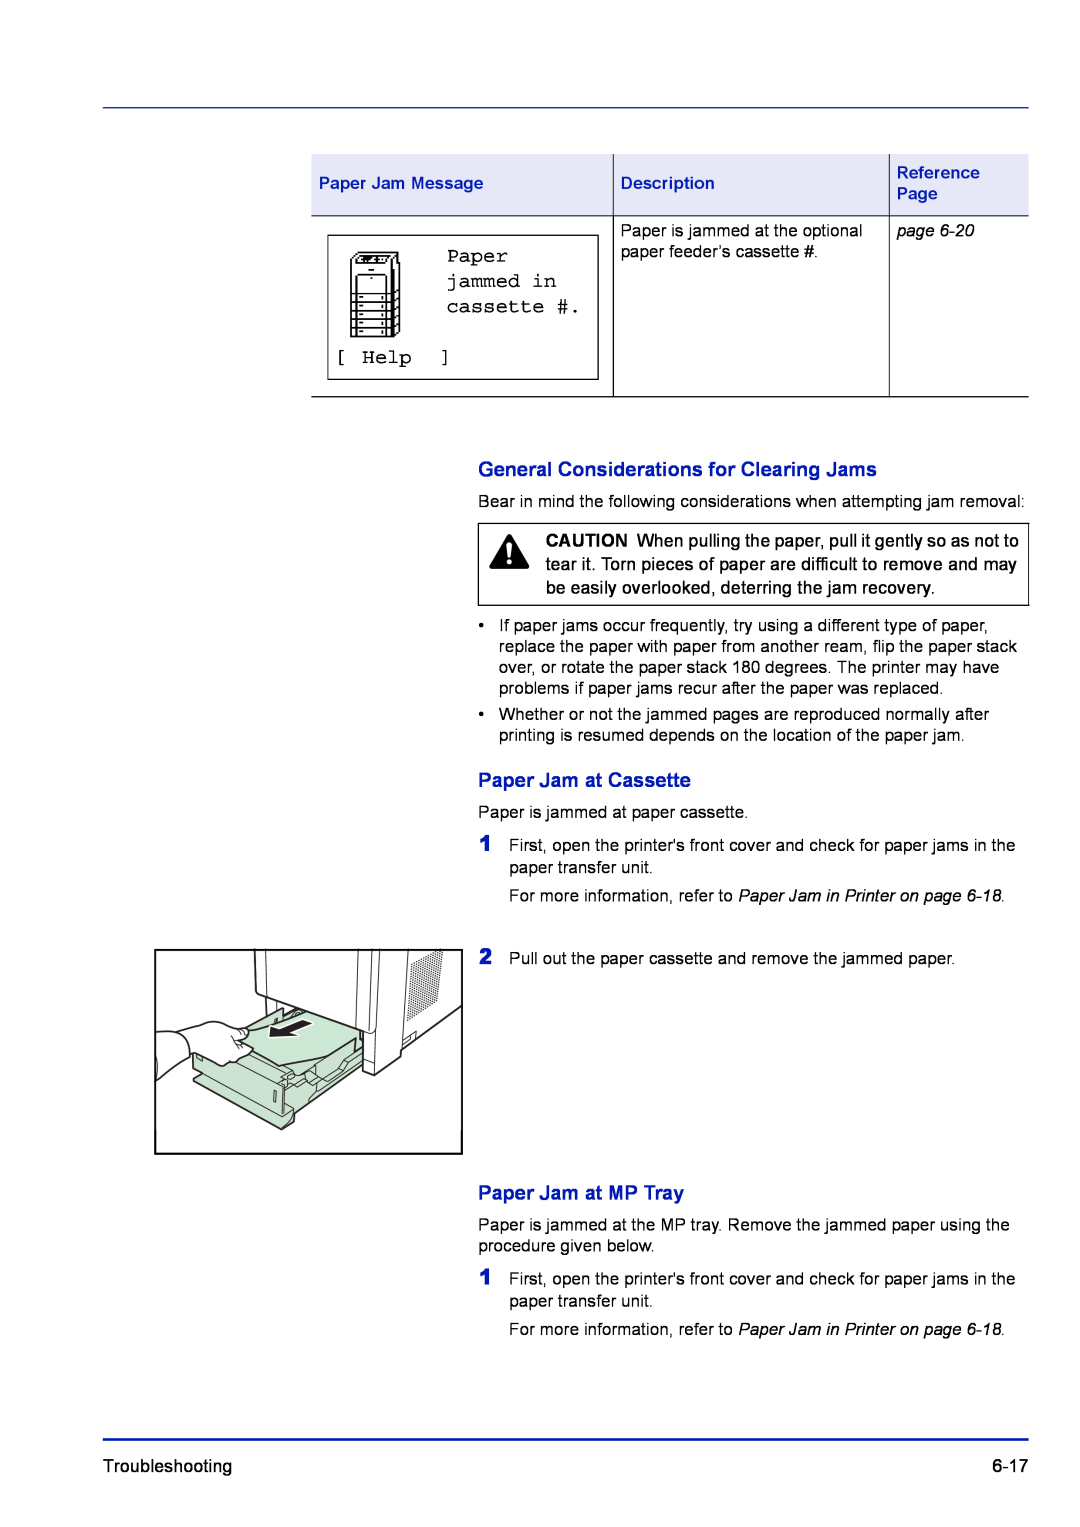 Kyocera FS-C5400DN, FS-1300D manual jammed in, cassette #, Help, Paper Jam Message, Description, Reference, Page, page 